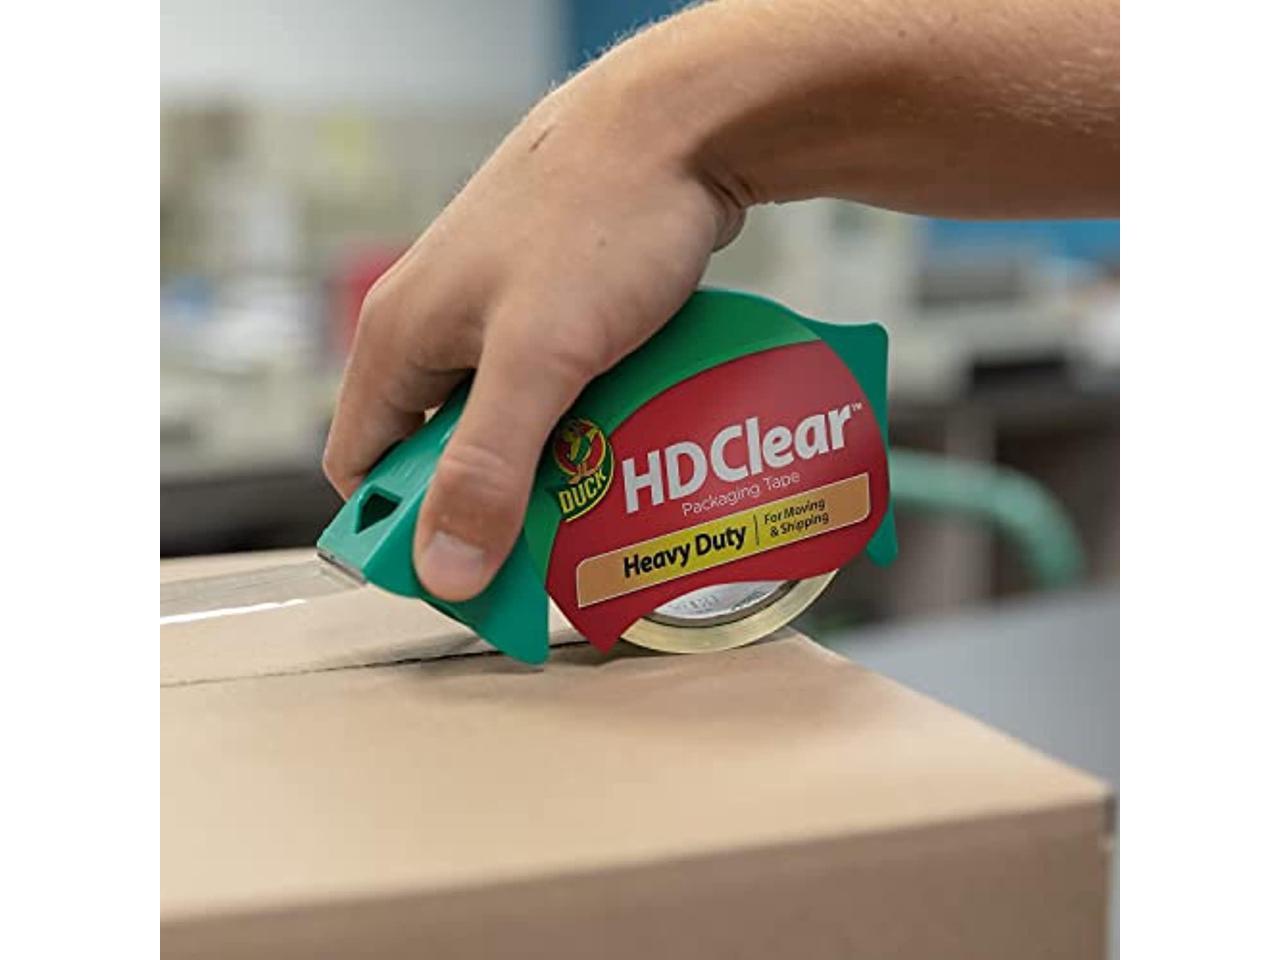 Duck Heavy-Duty Carton Packaging Tape 3" x 55yds Clear 6/Pack 0007496